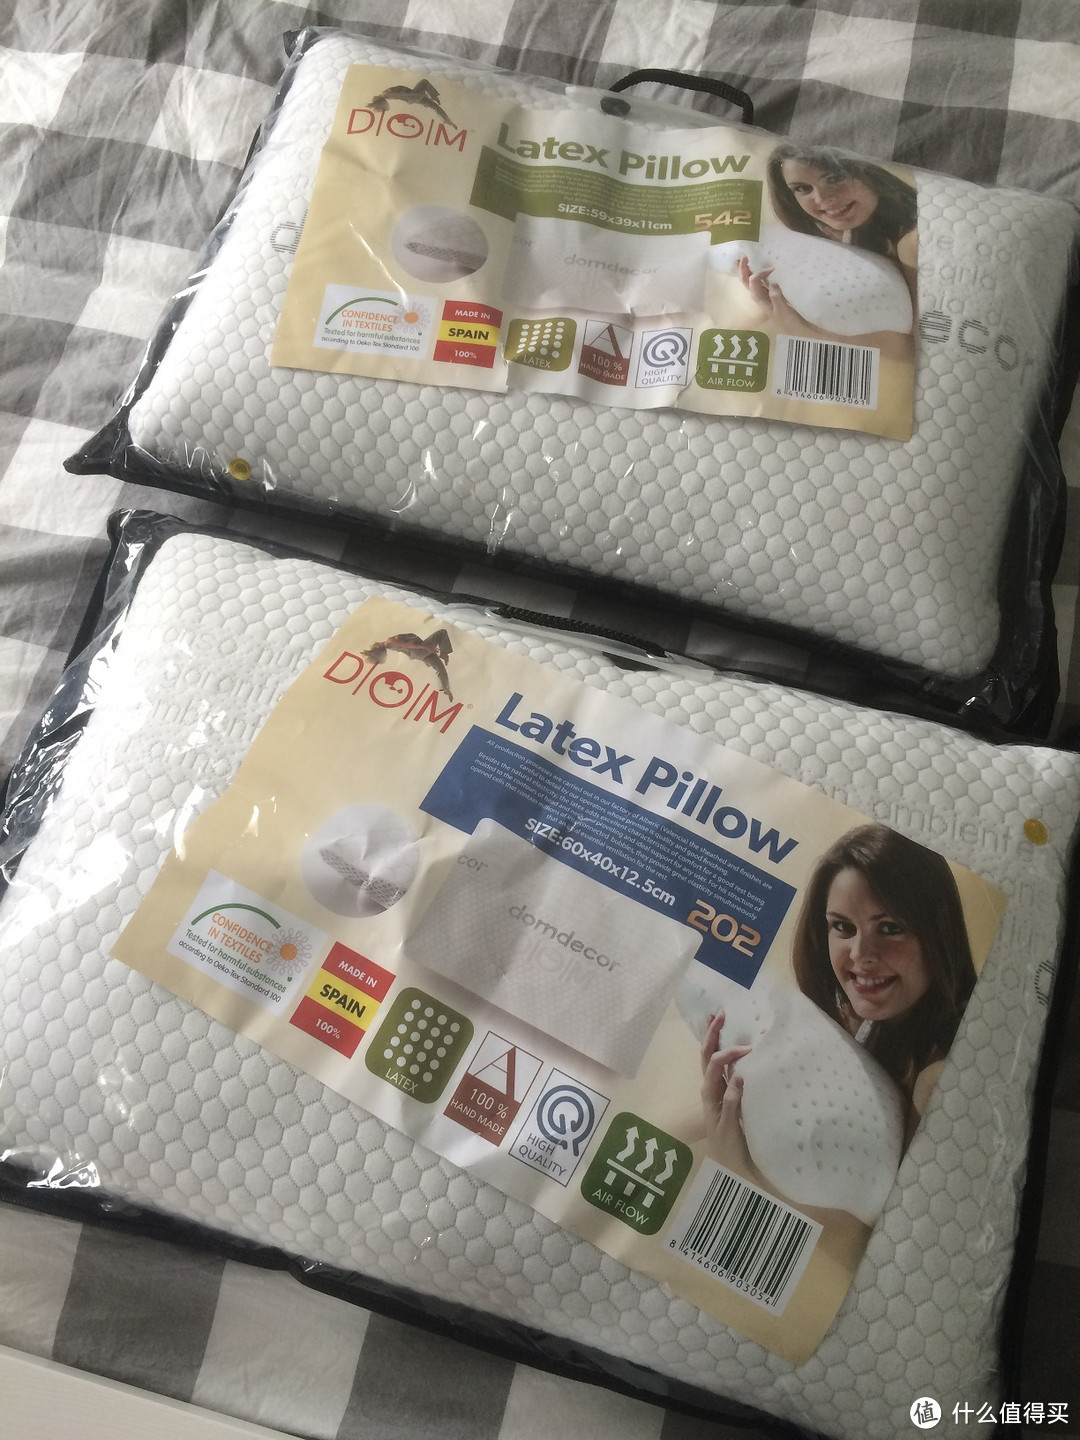 DOM 西班牙乳胶枕